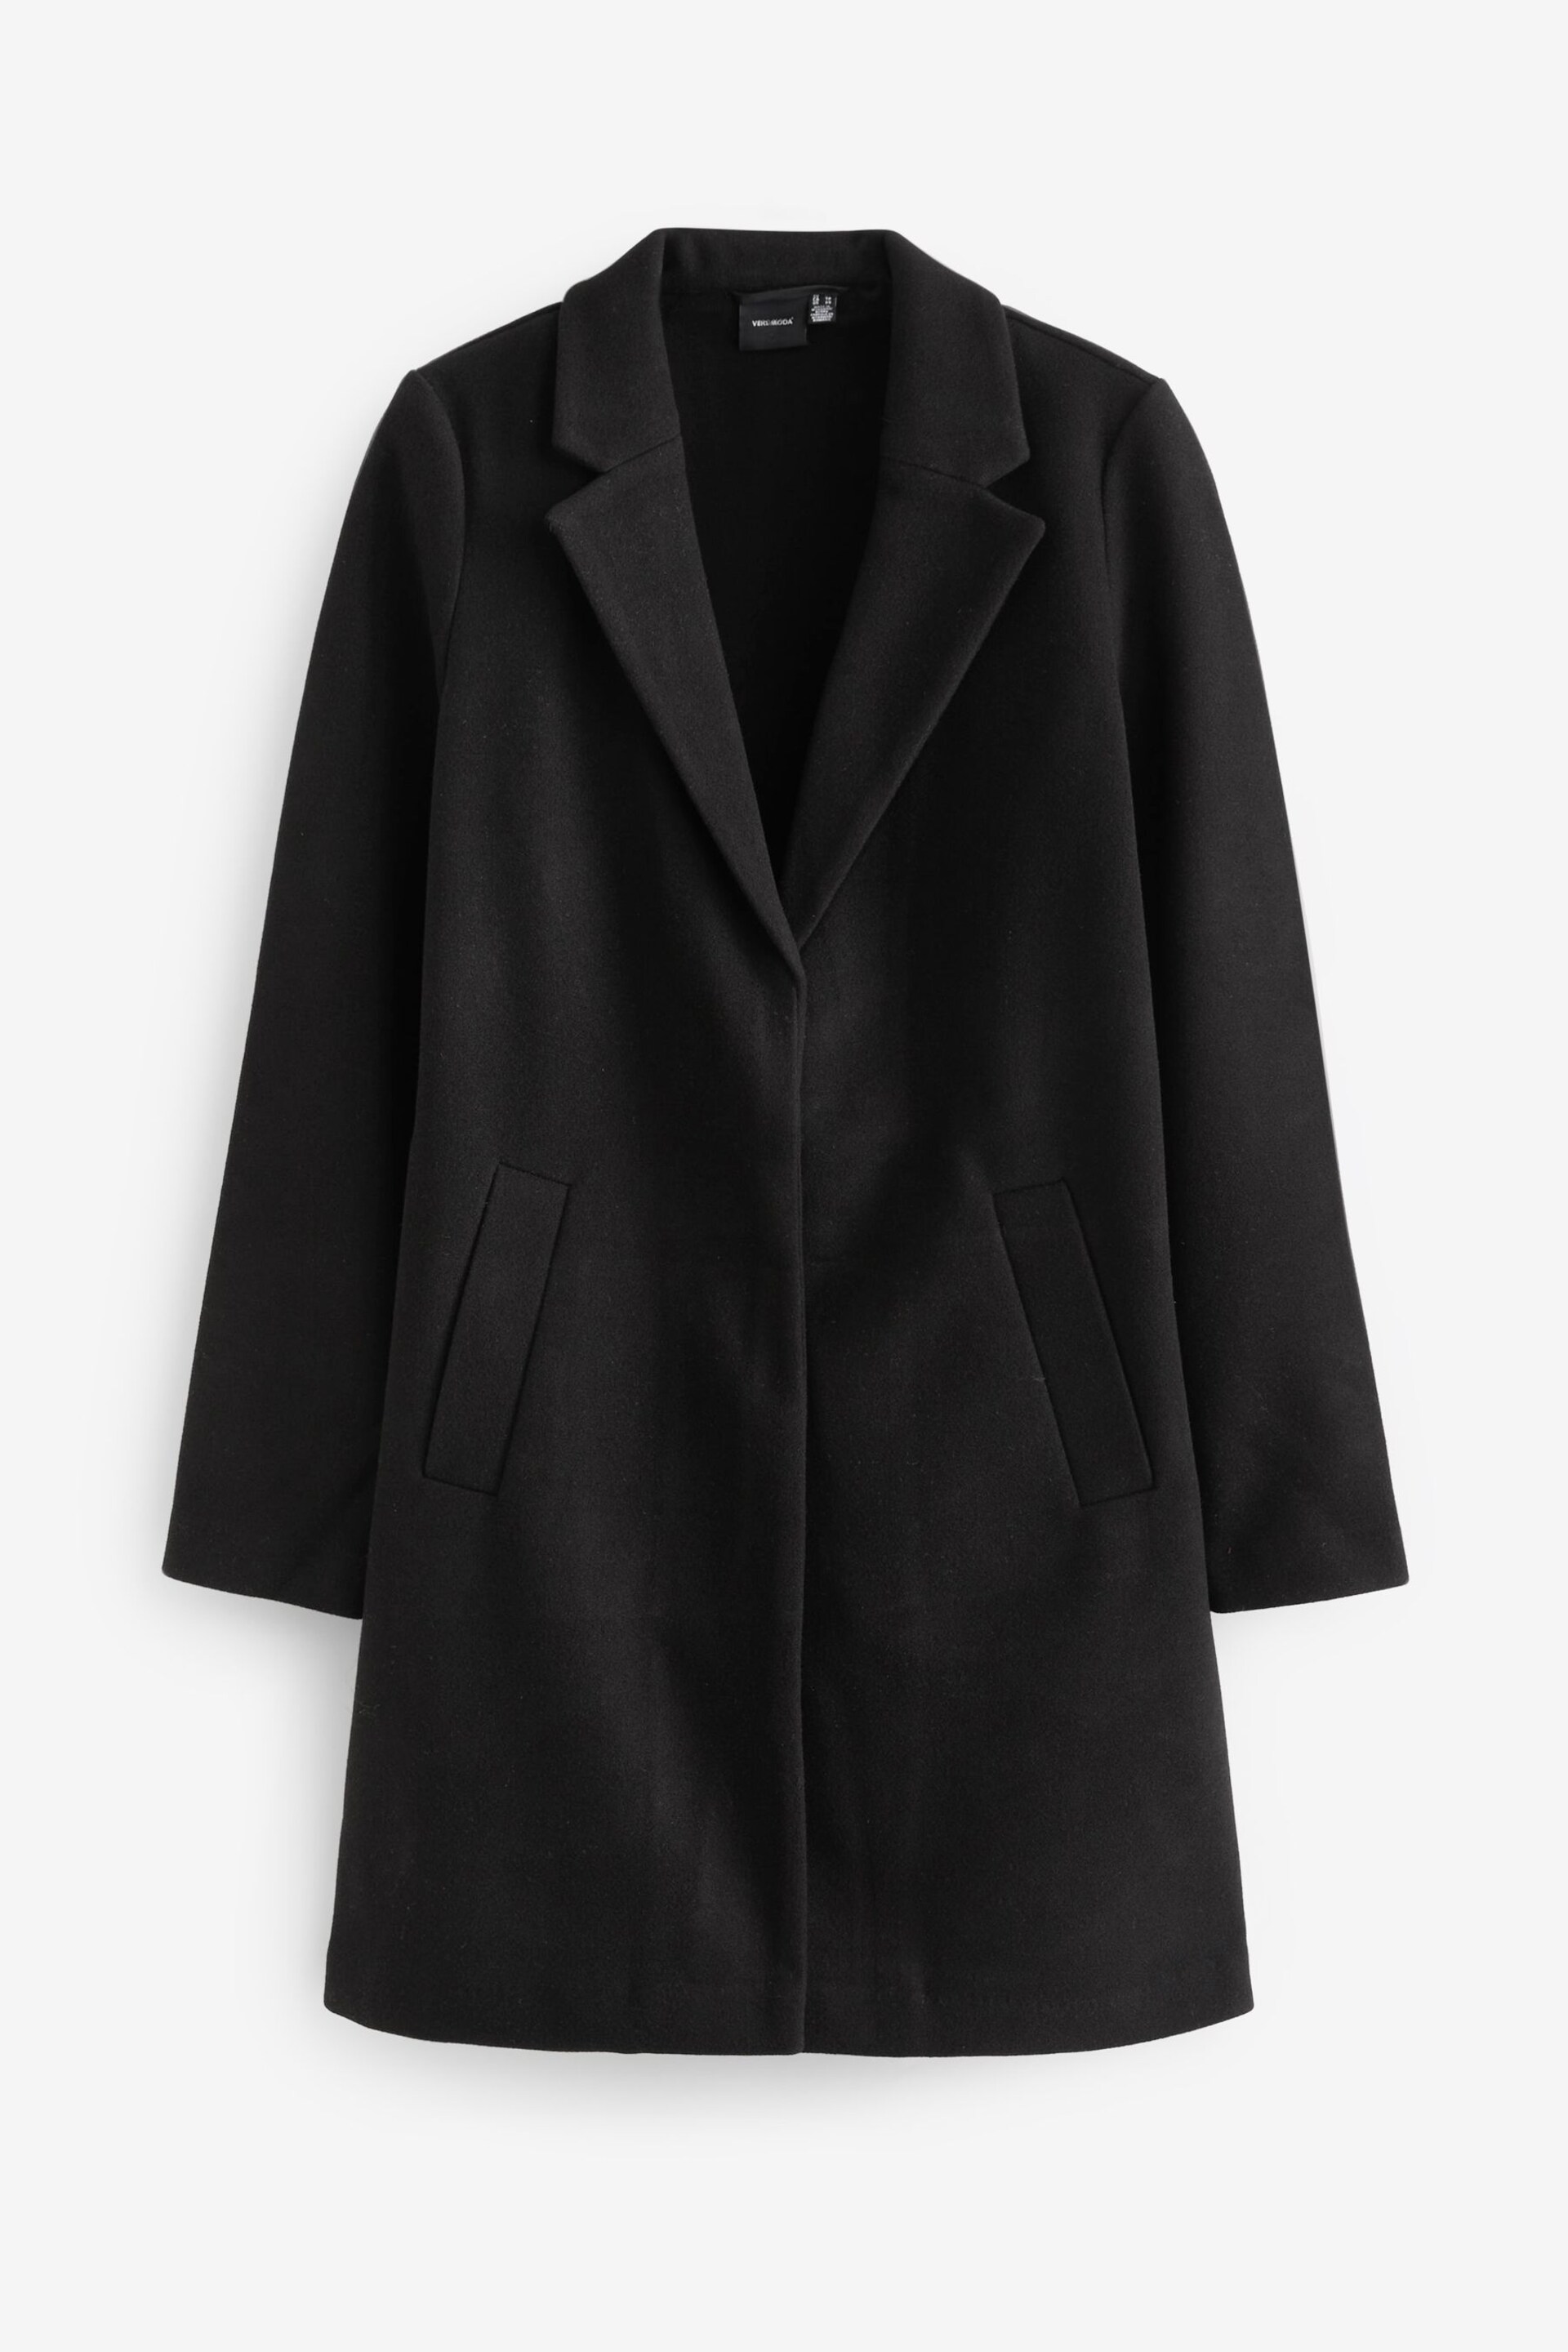 VERO MODA Black Tailored Smart Coat - Image 5 of 5